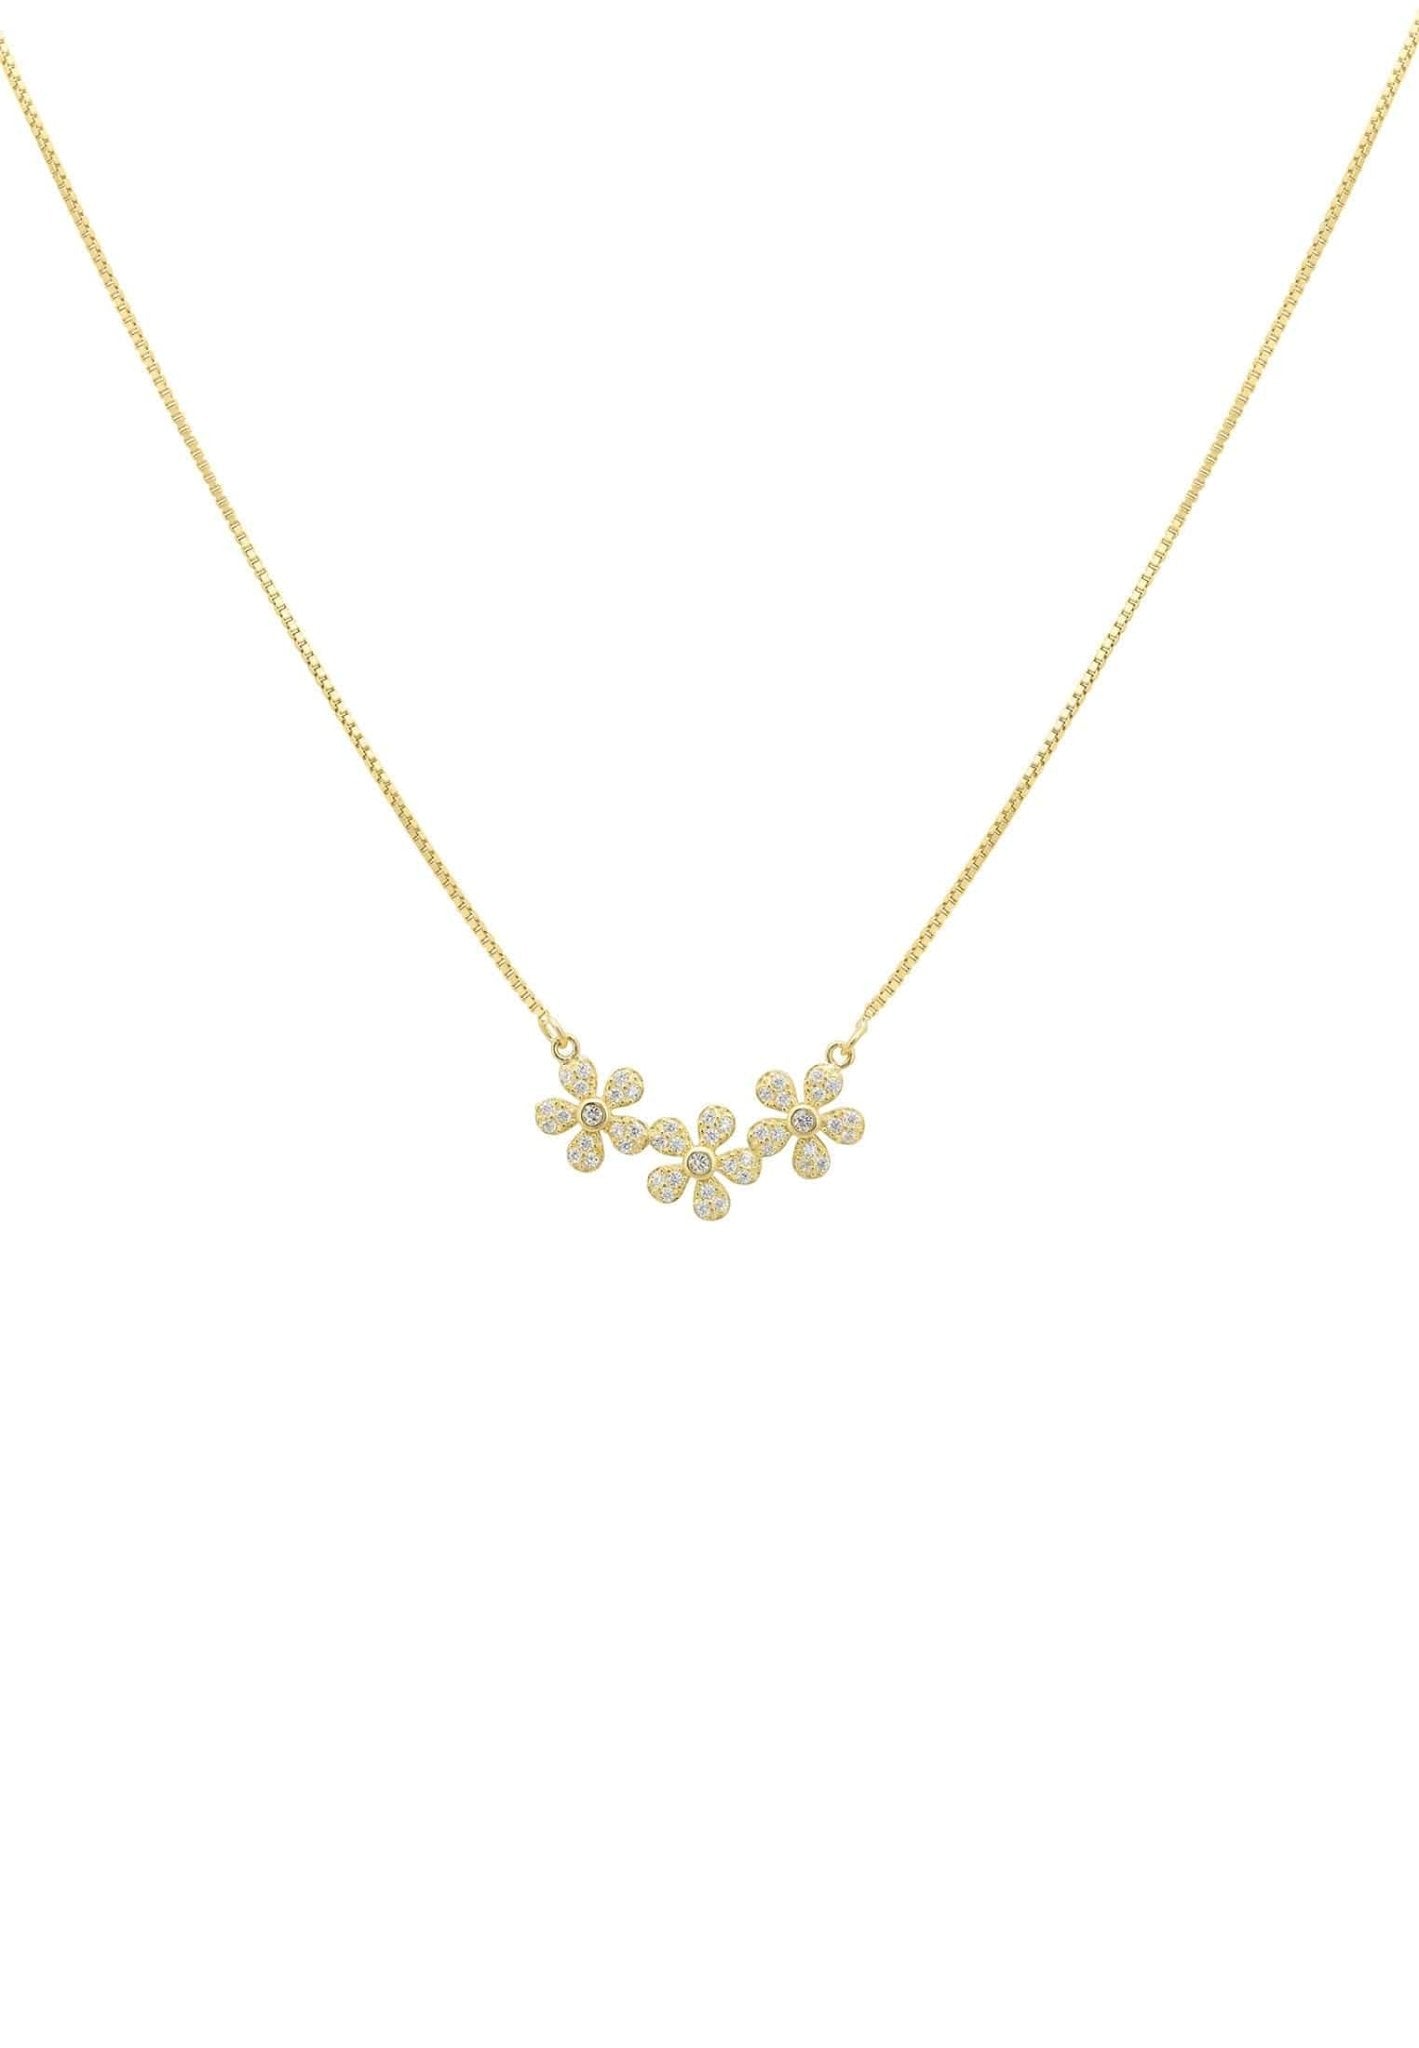 Daisy Chain Necklace Gold - LATELITA Necklaces